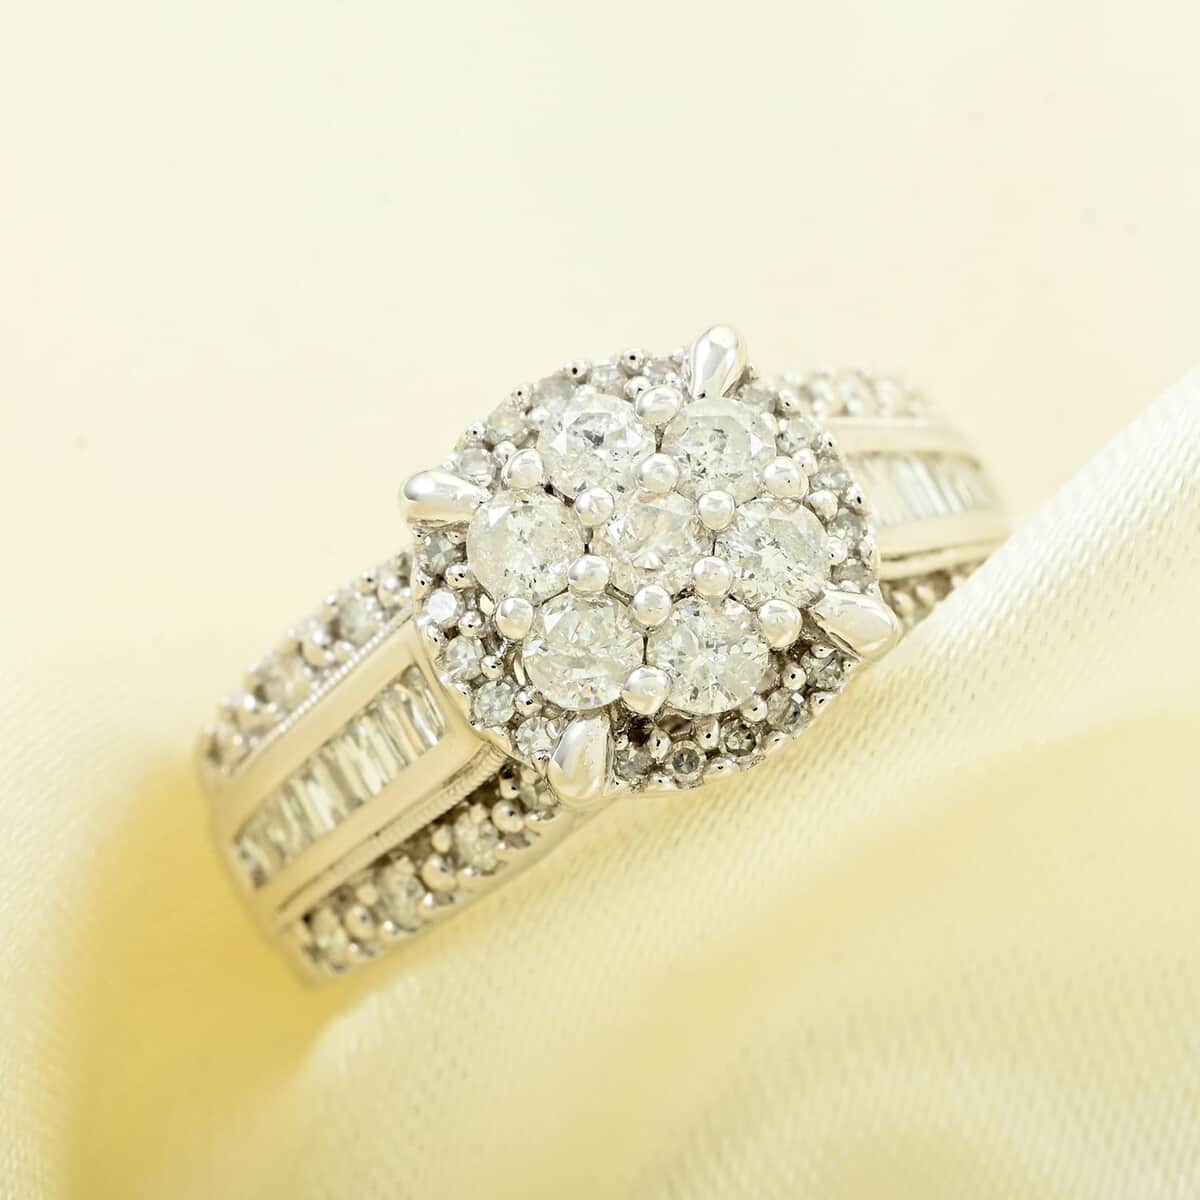 10K White Gold Diamond I2-I3 Ring (Size 6.0) 5.85 Grams 1.00 ctw (Del. in 10-12 Days) image number 1